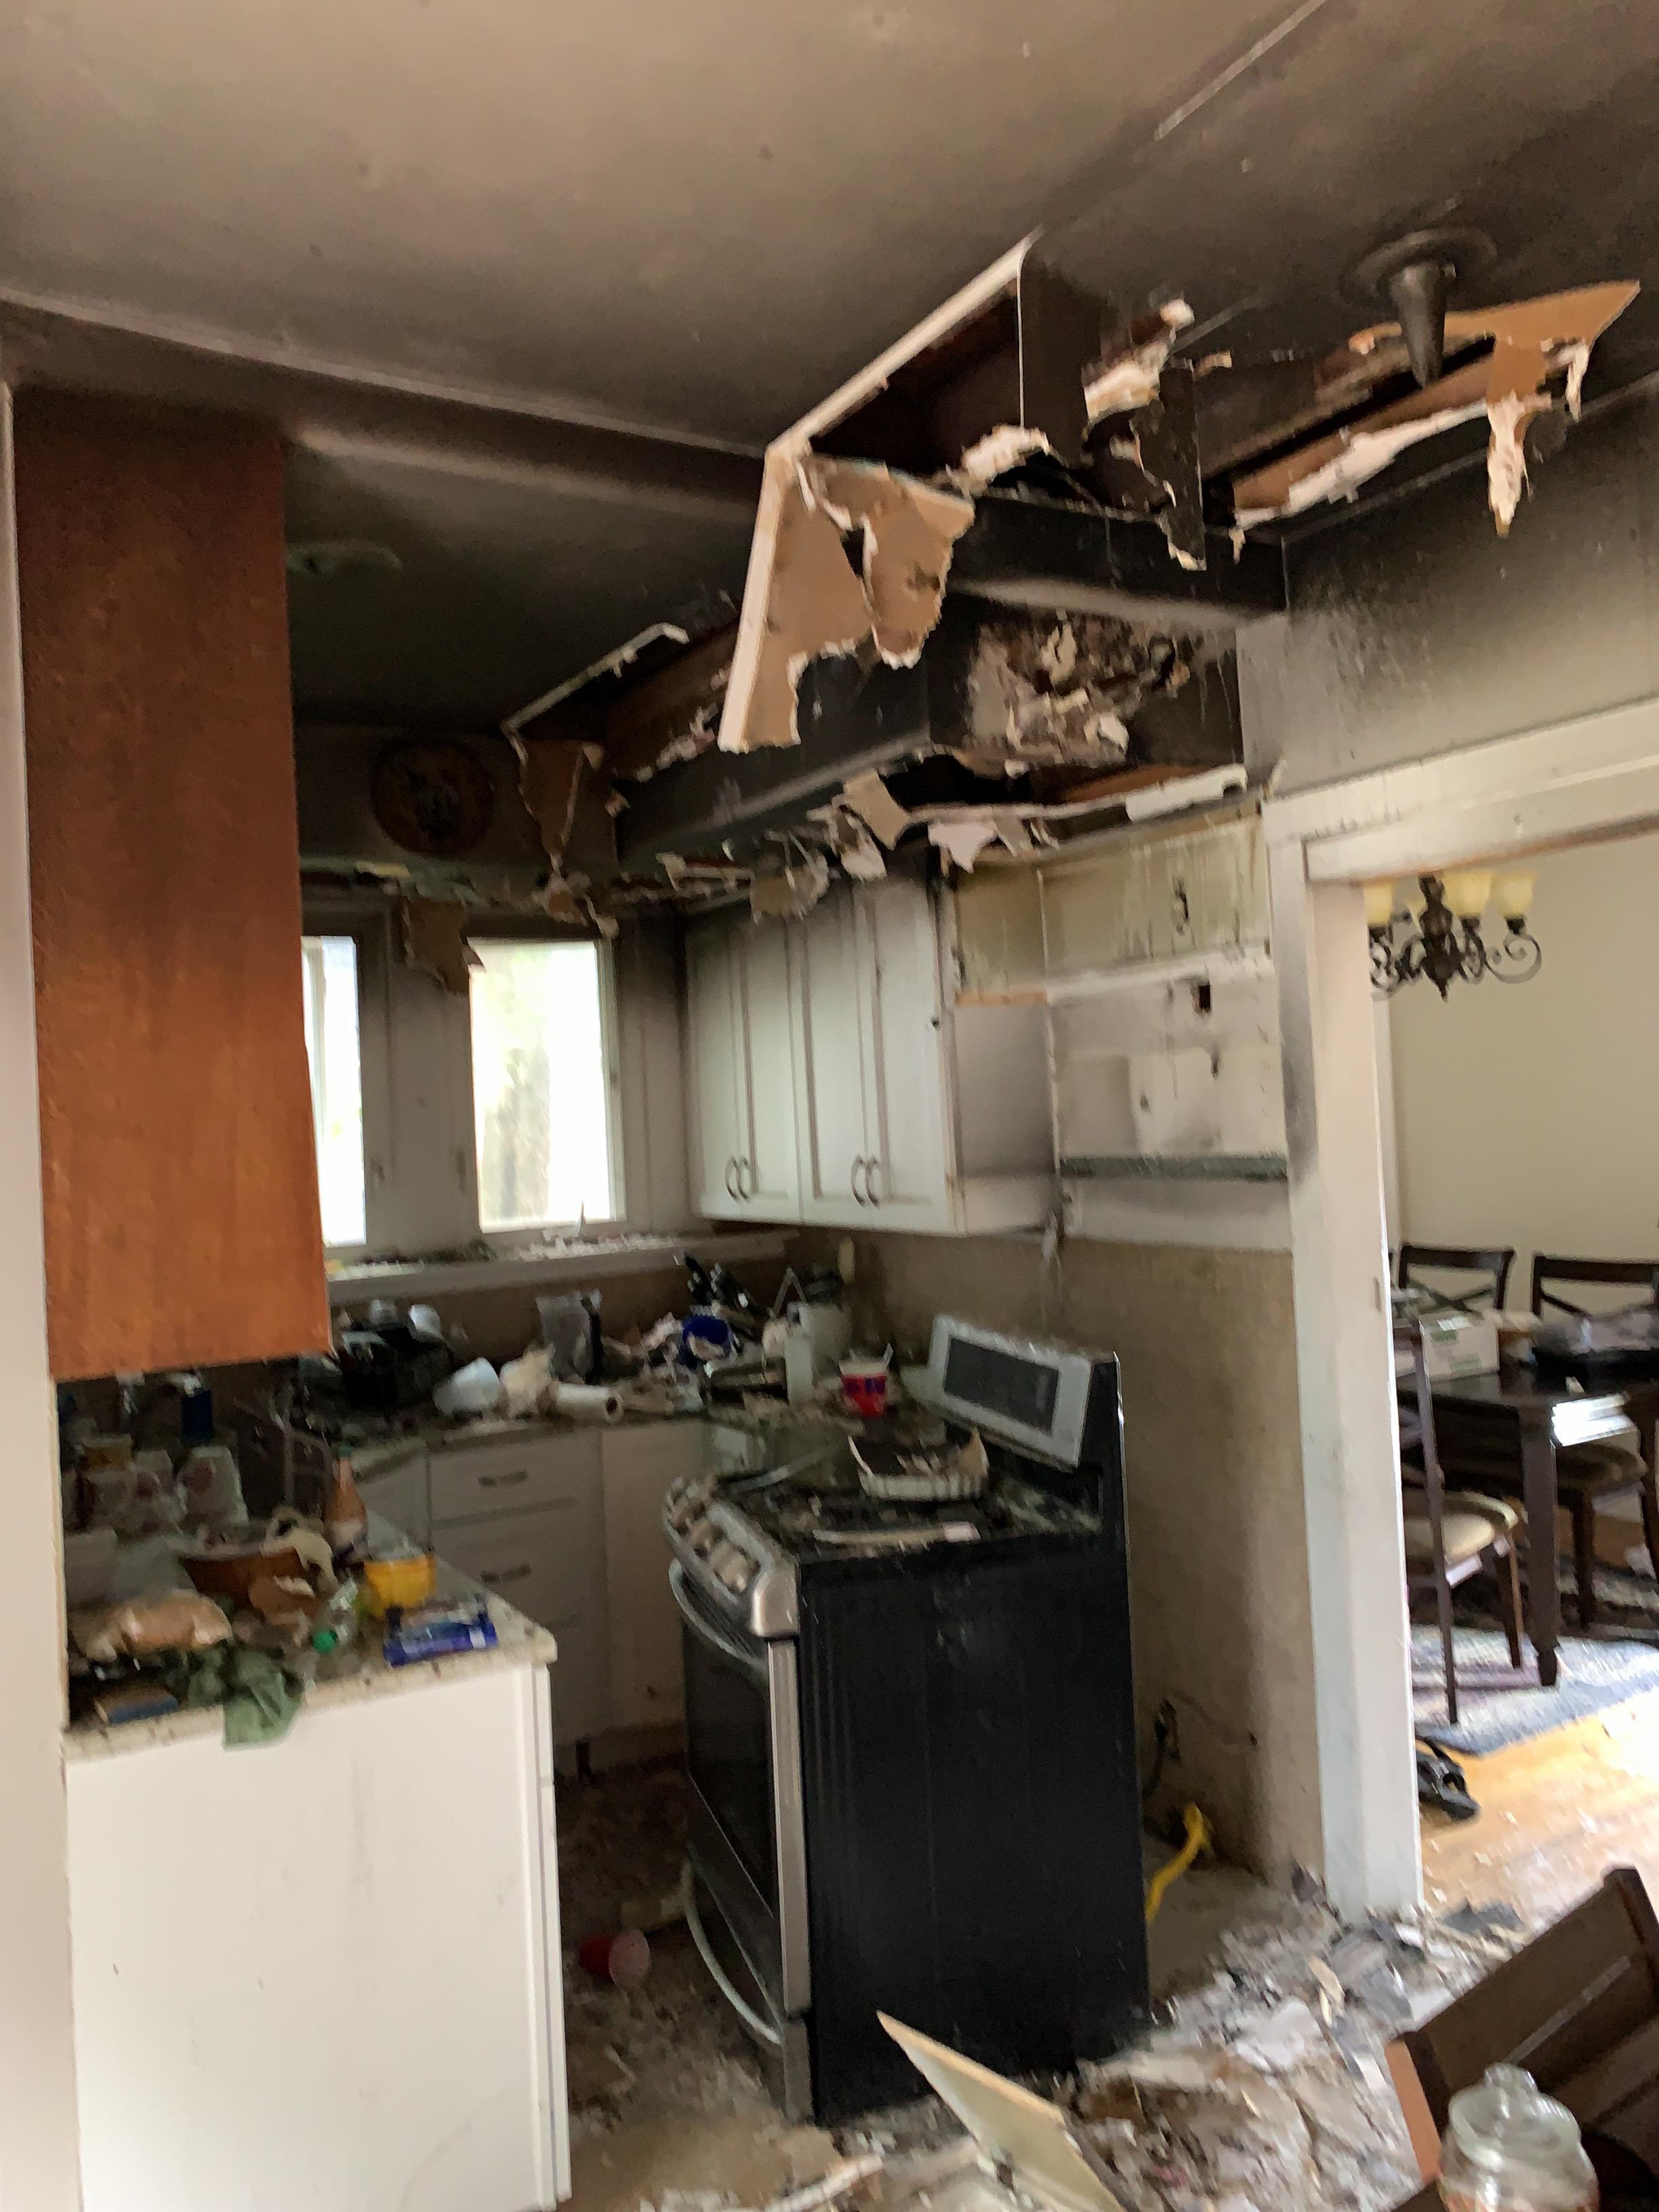 Extensive damage in kitchen